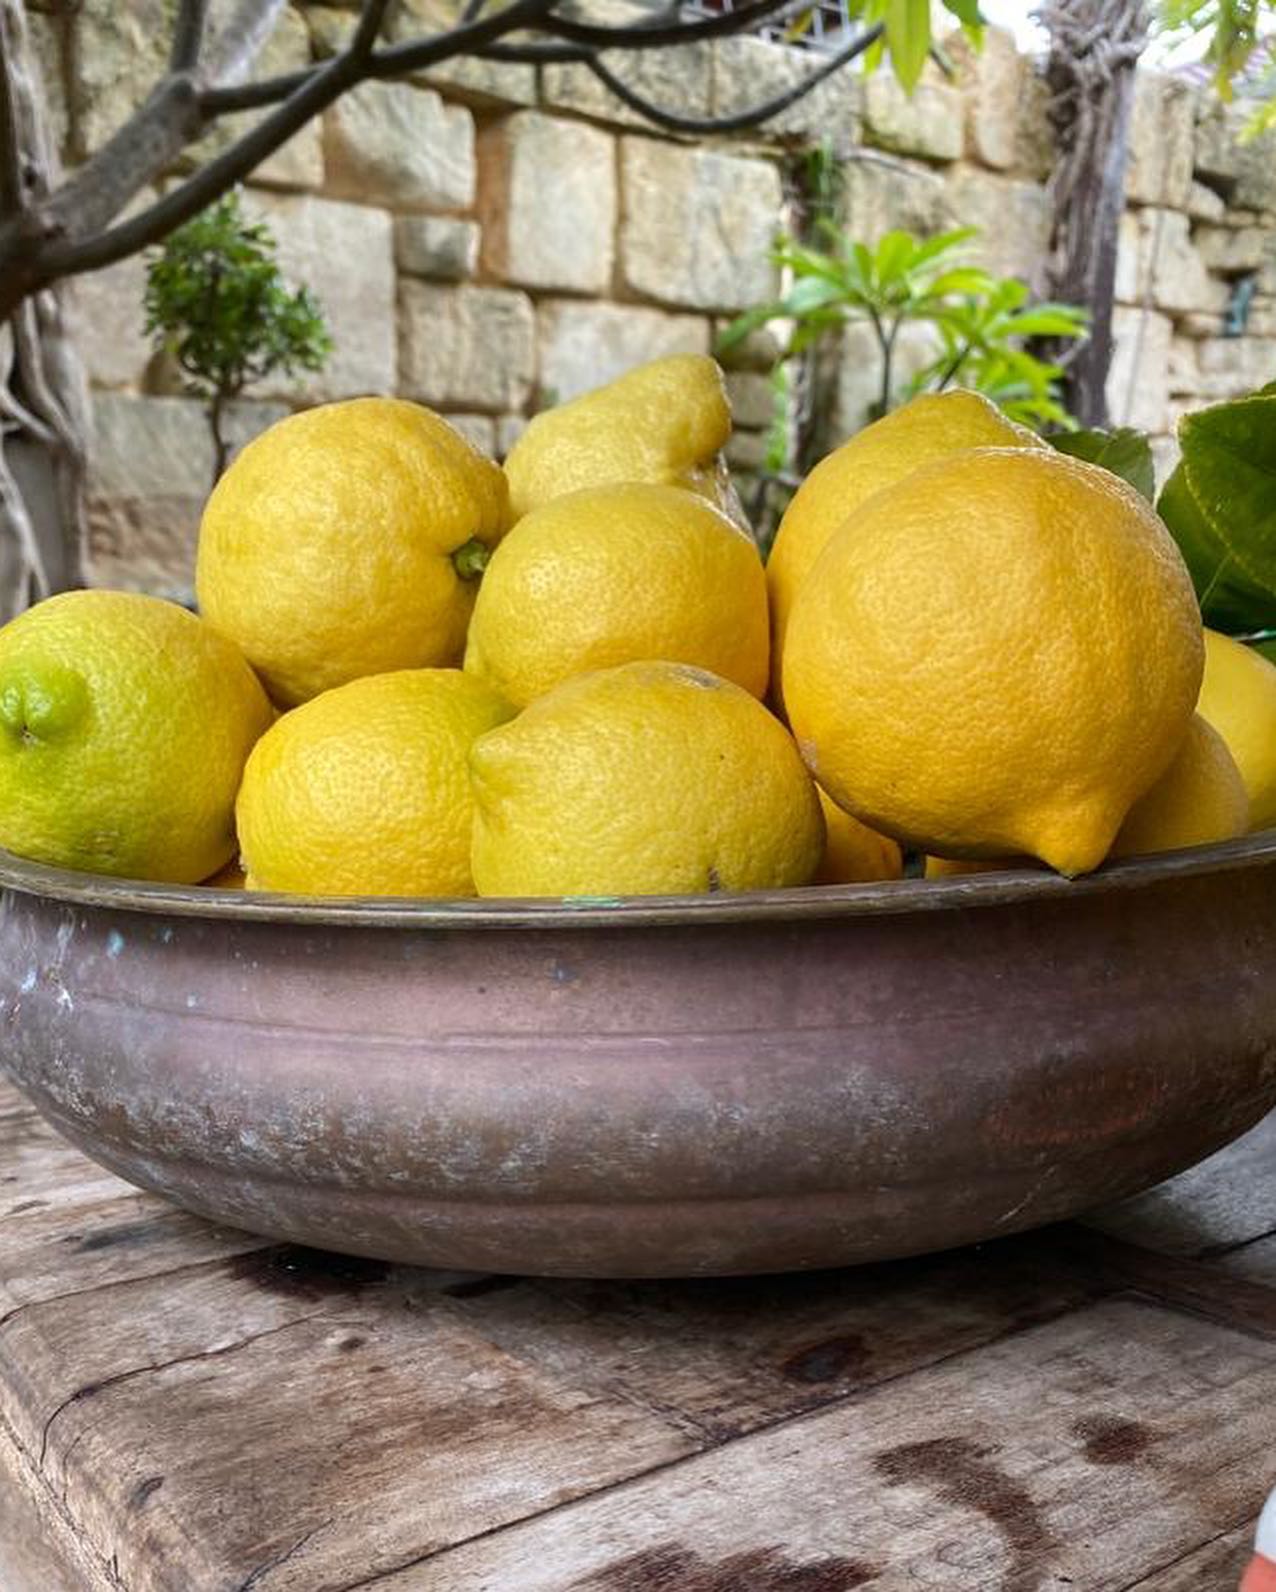 Lemon is called Jambira/ Jambeera जम्बीर in Sanskrit.